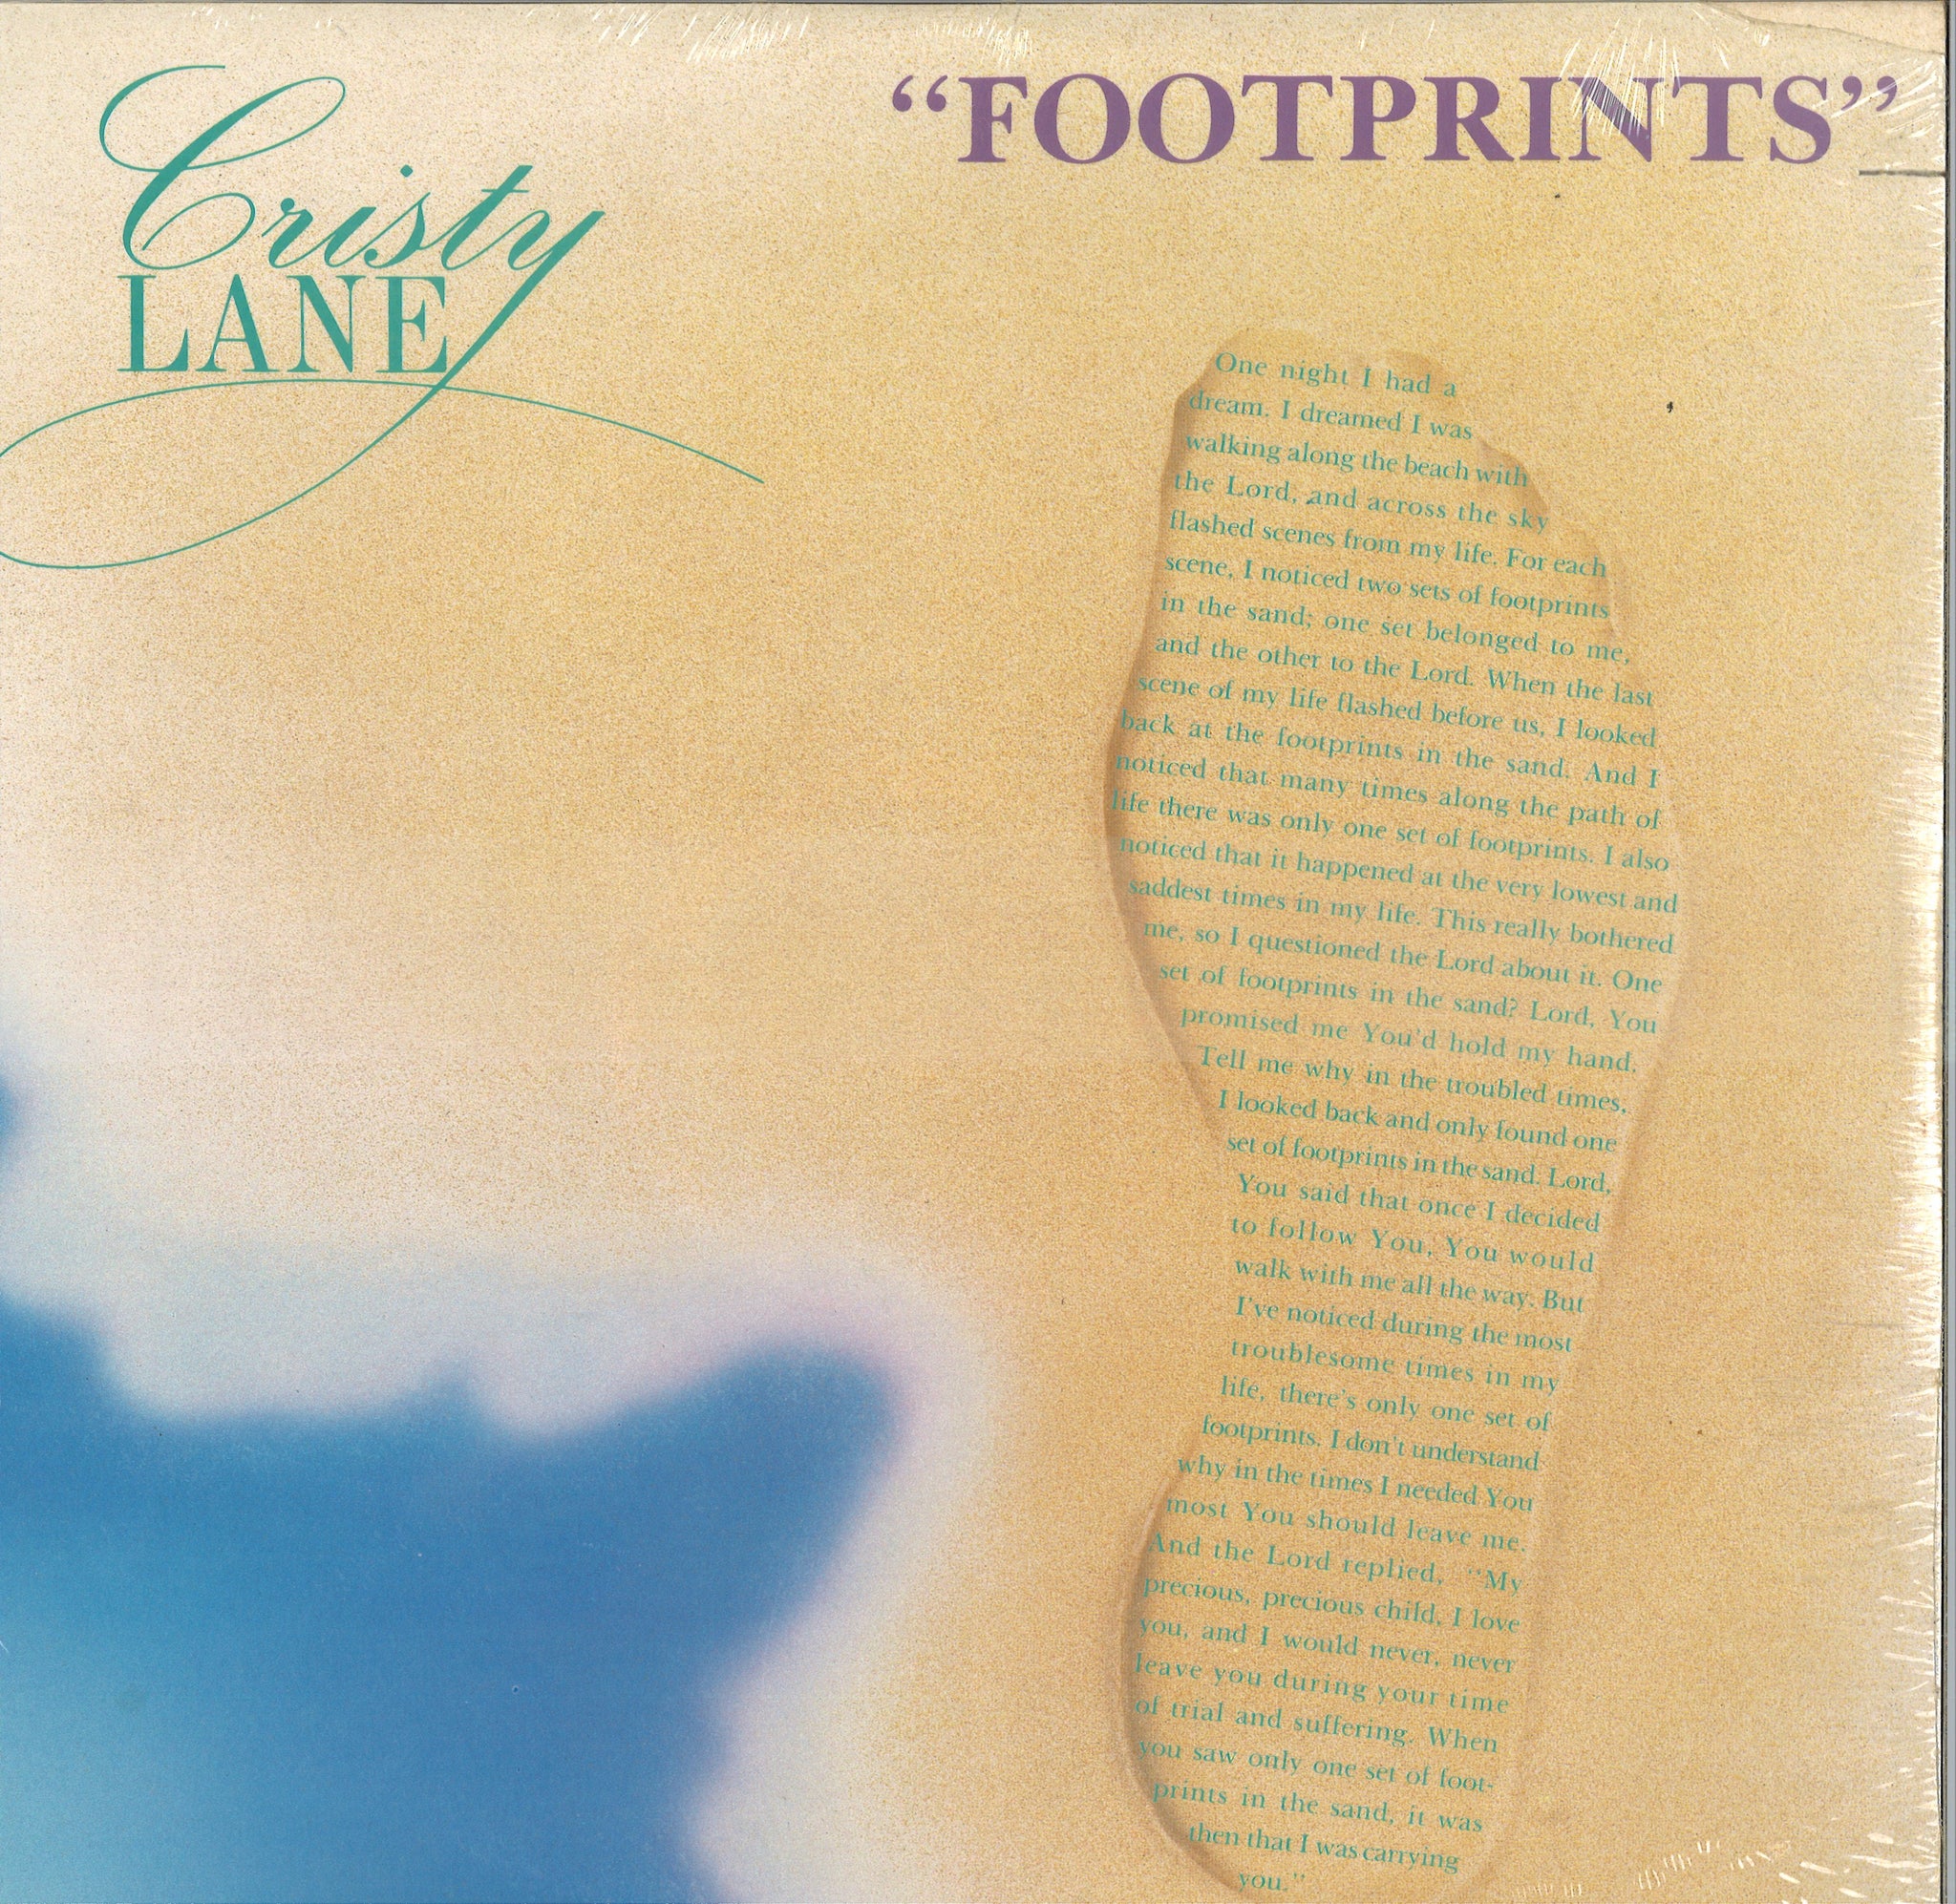 Cristy Lane Footprints